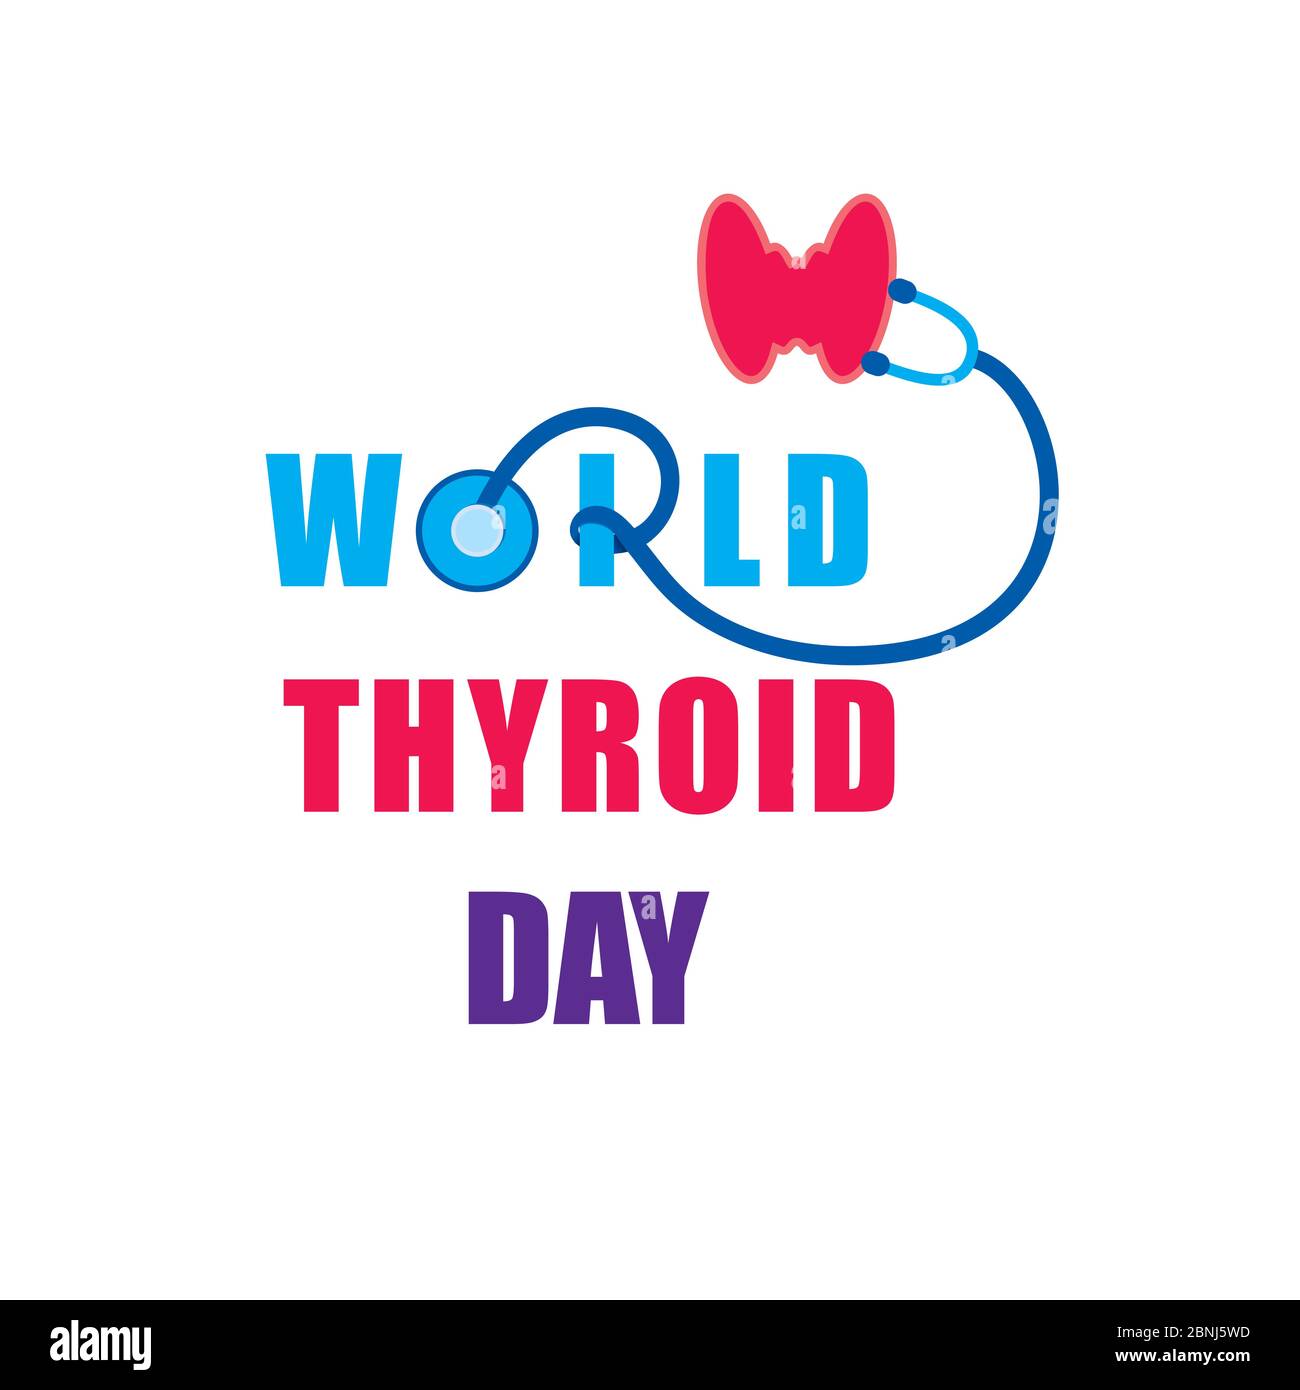 Vector illustration for World Thyroid Day banner or poster design Stock Vector